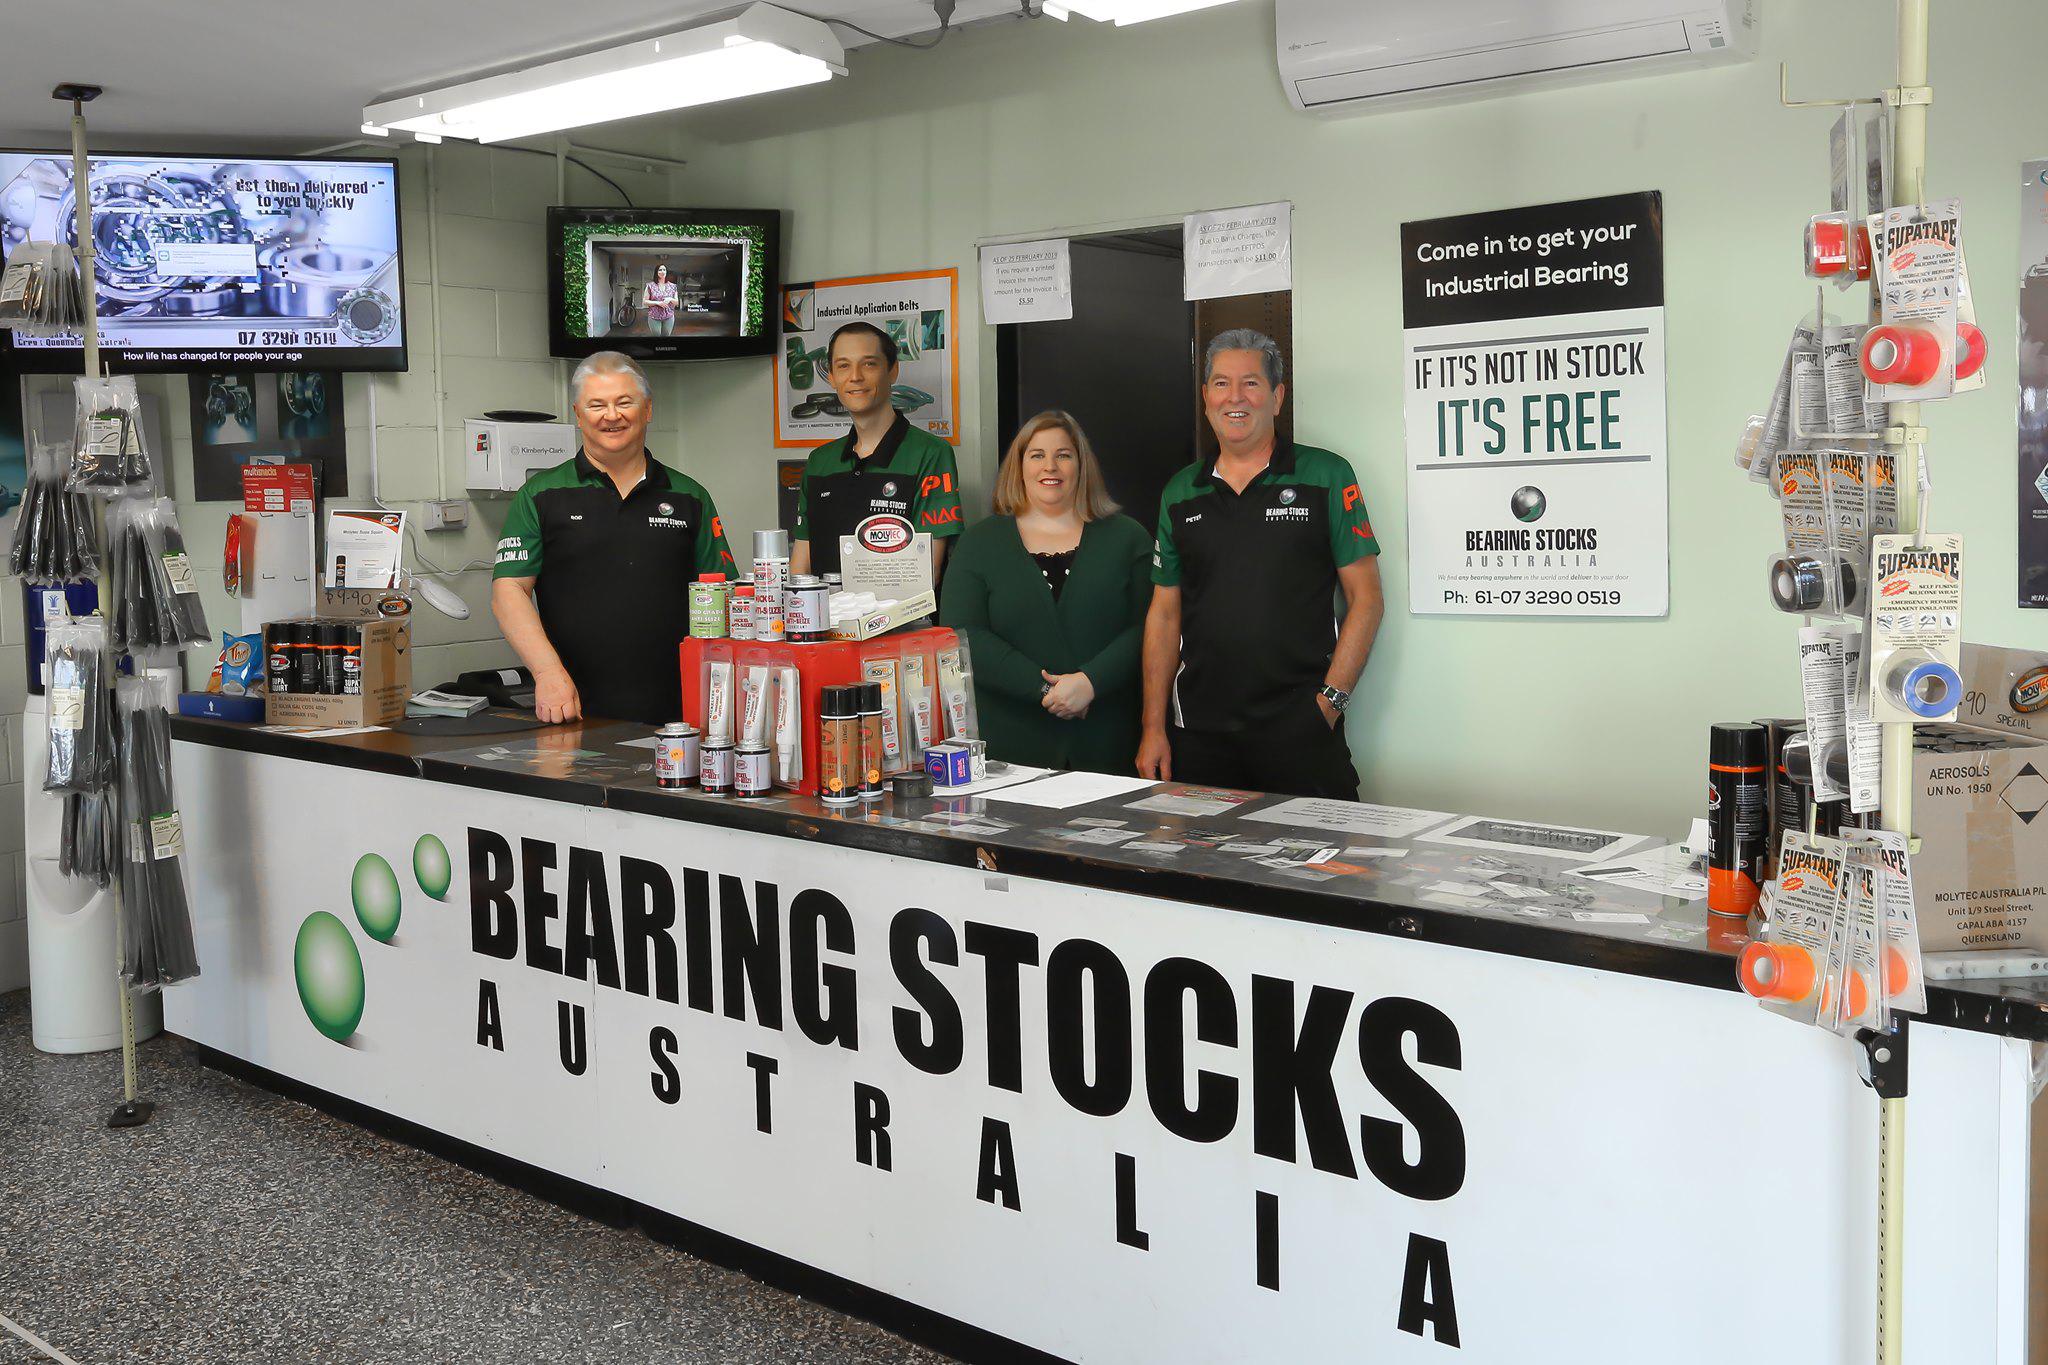 Images Bearings Stocks Australia